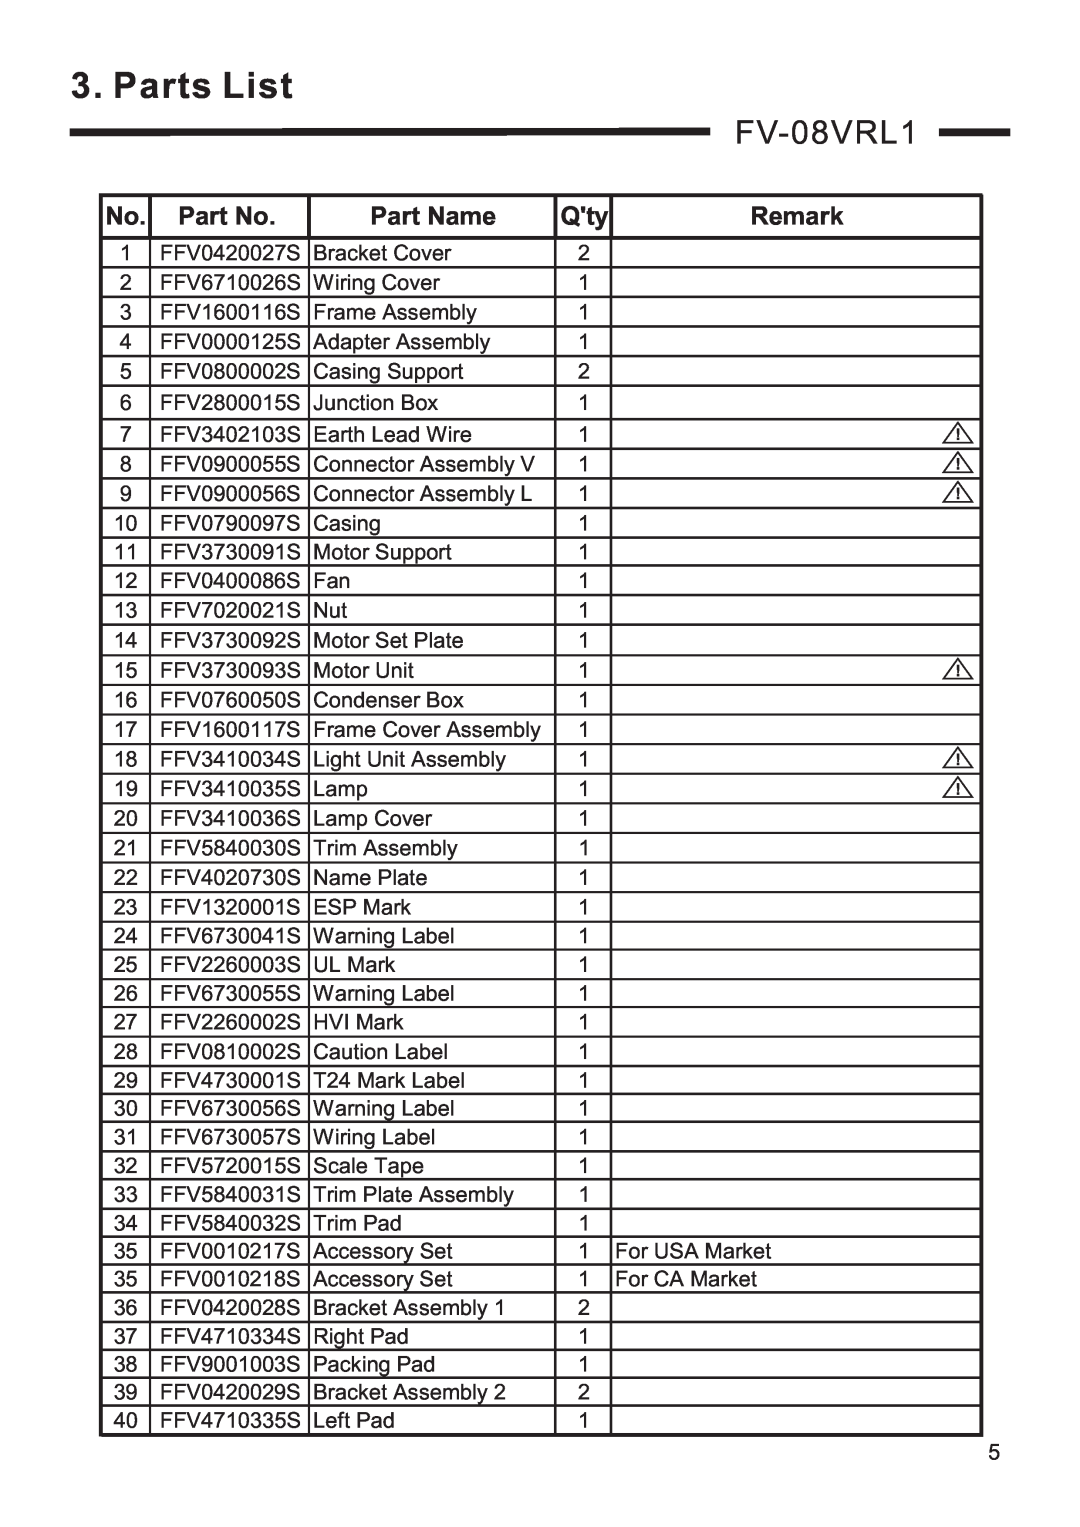 Panasonic FV-08VRL1 service manual Parts List, Part Name, Remark 